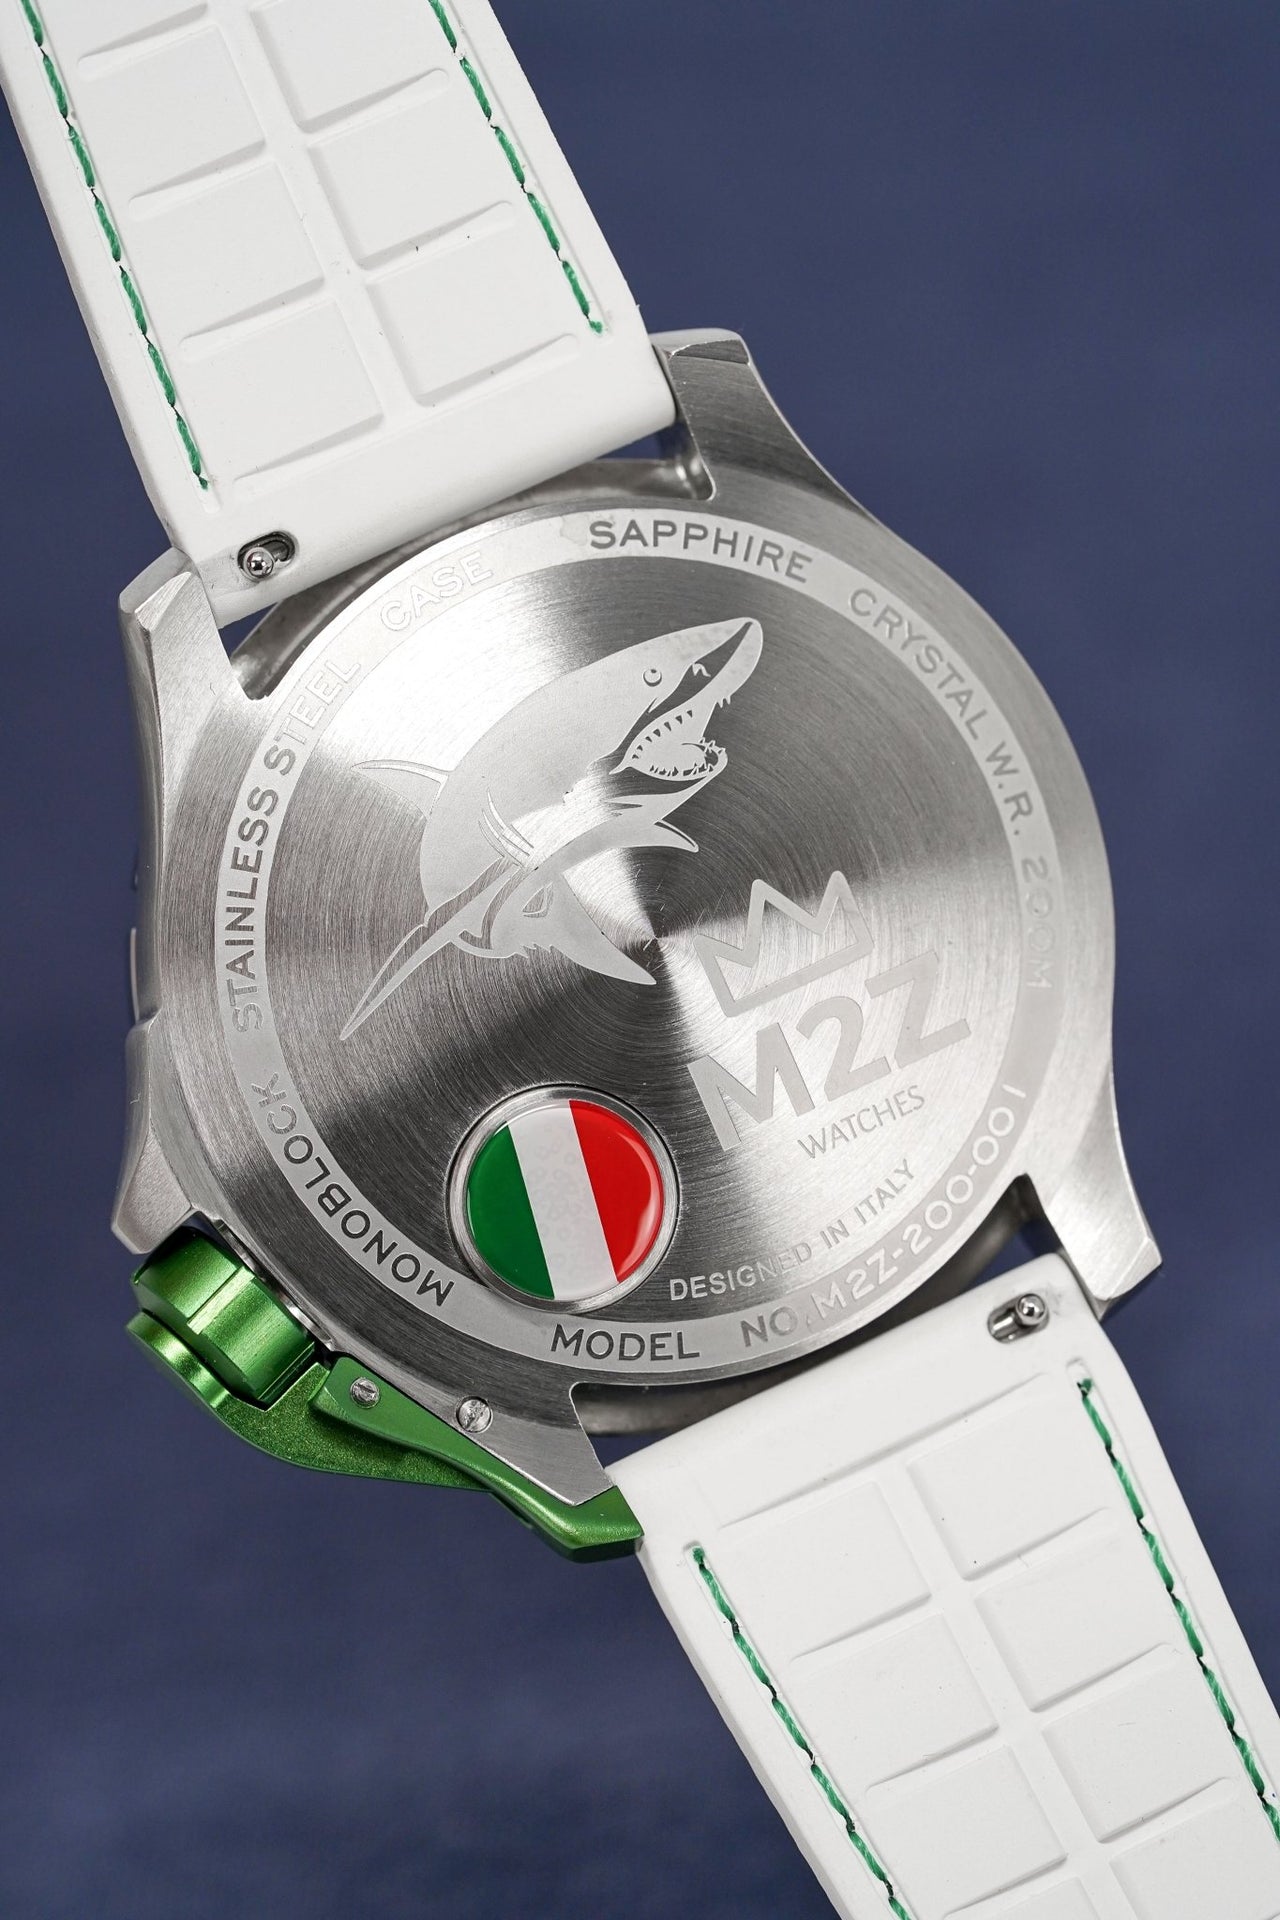 M2Z Men's Watch Diver 200 Green 200-001 - Watches & Crystals